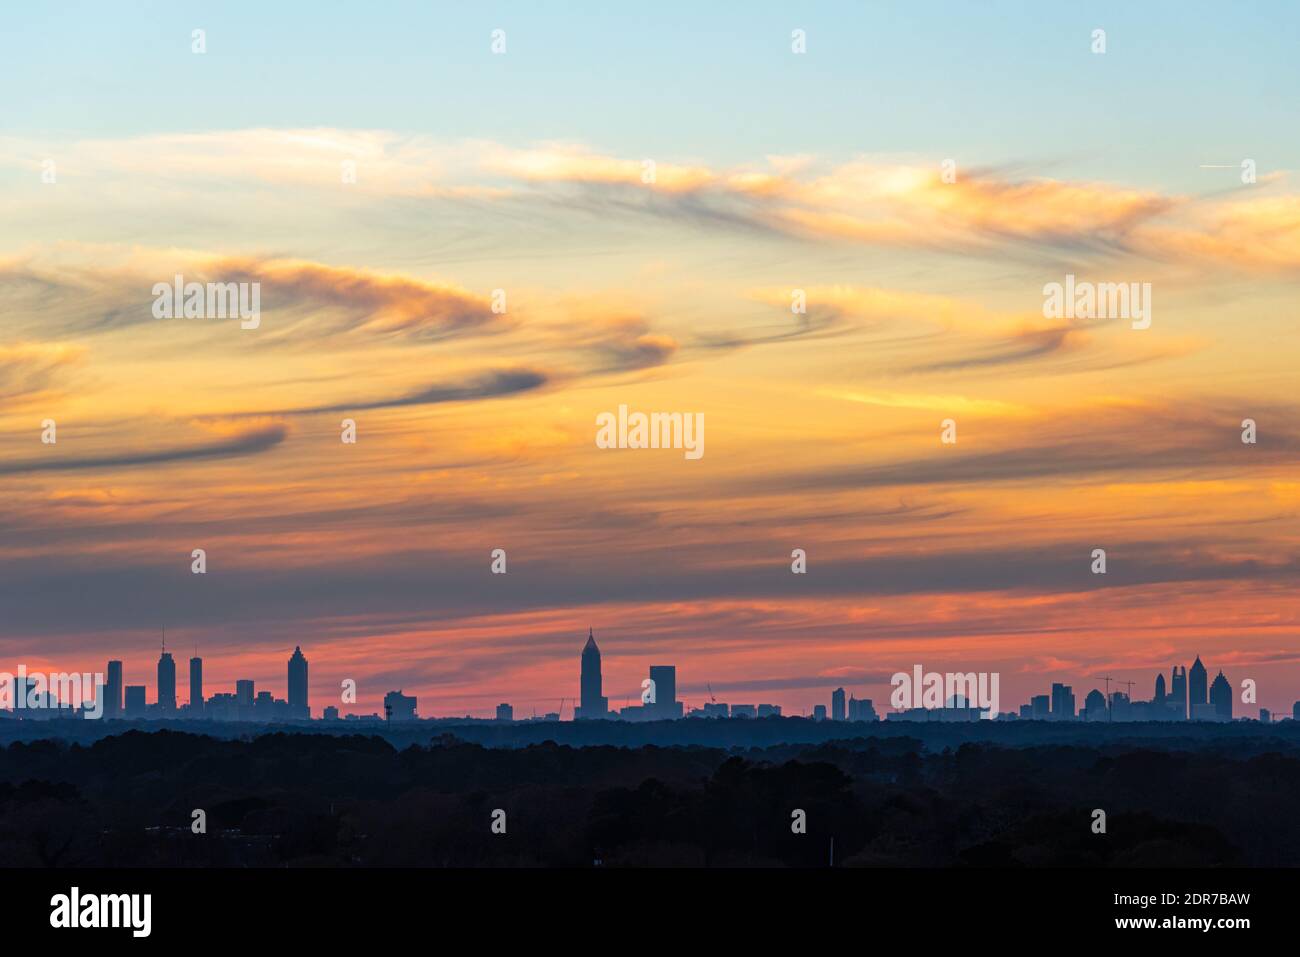 Atlanta city skyline beneath a dramatic sunset sky. (USA) Stock Photo